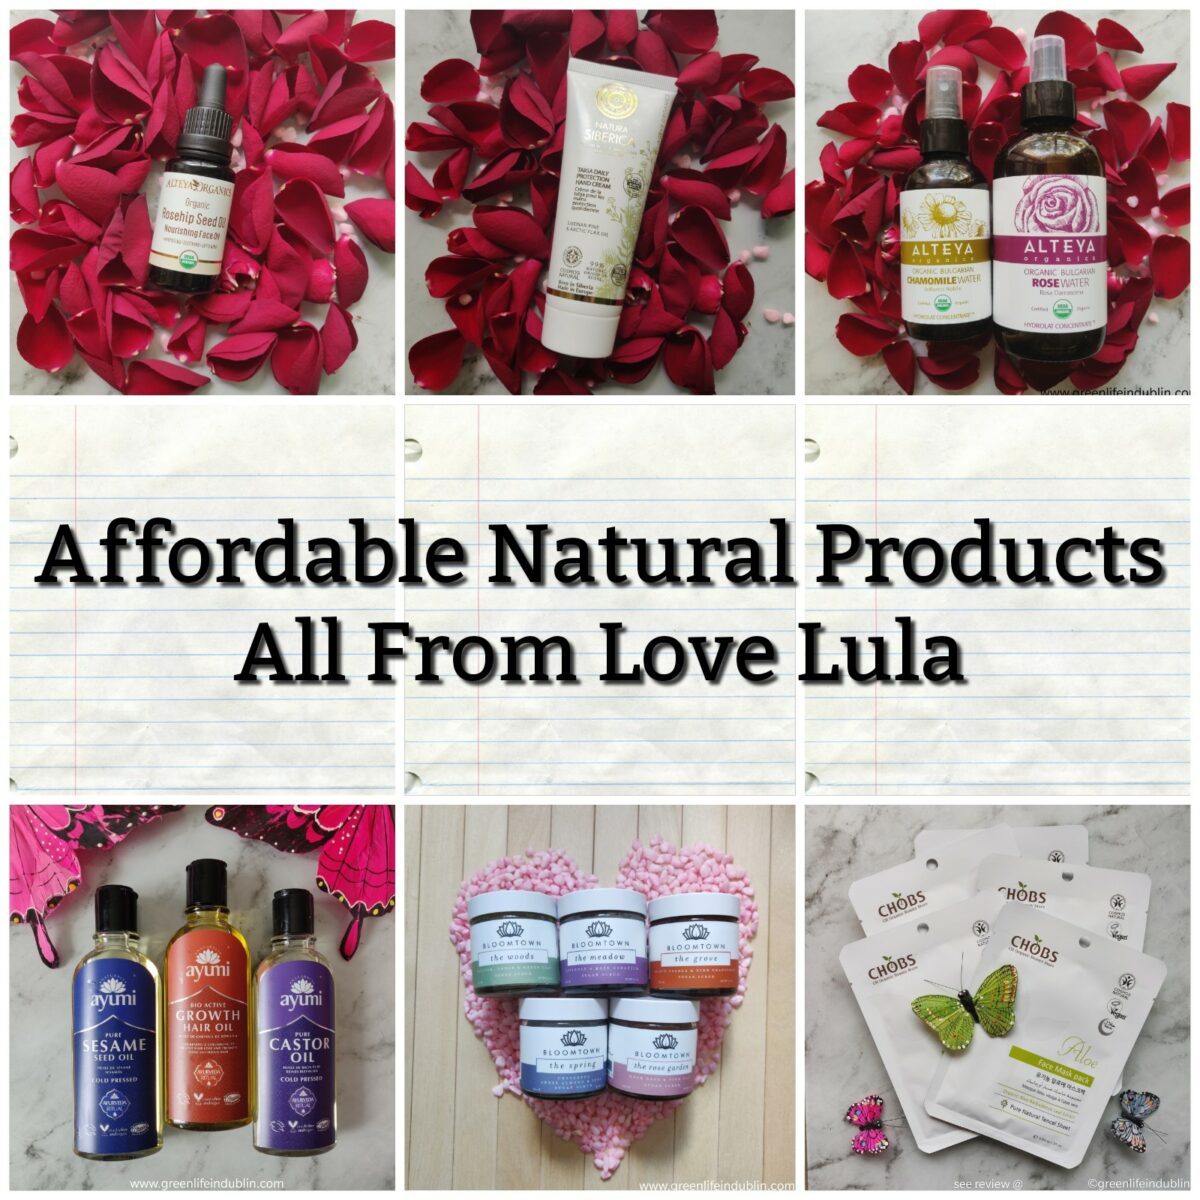 Affordable Natural Products at Love Lula